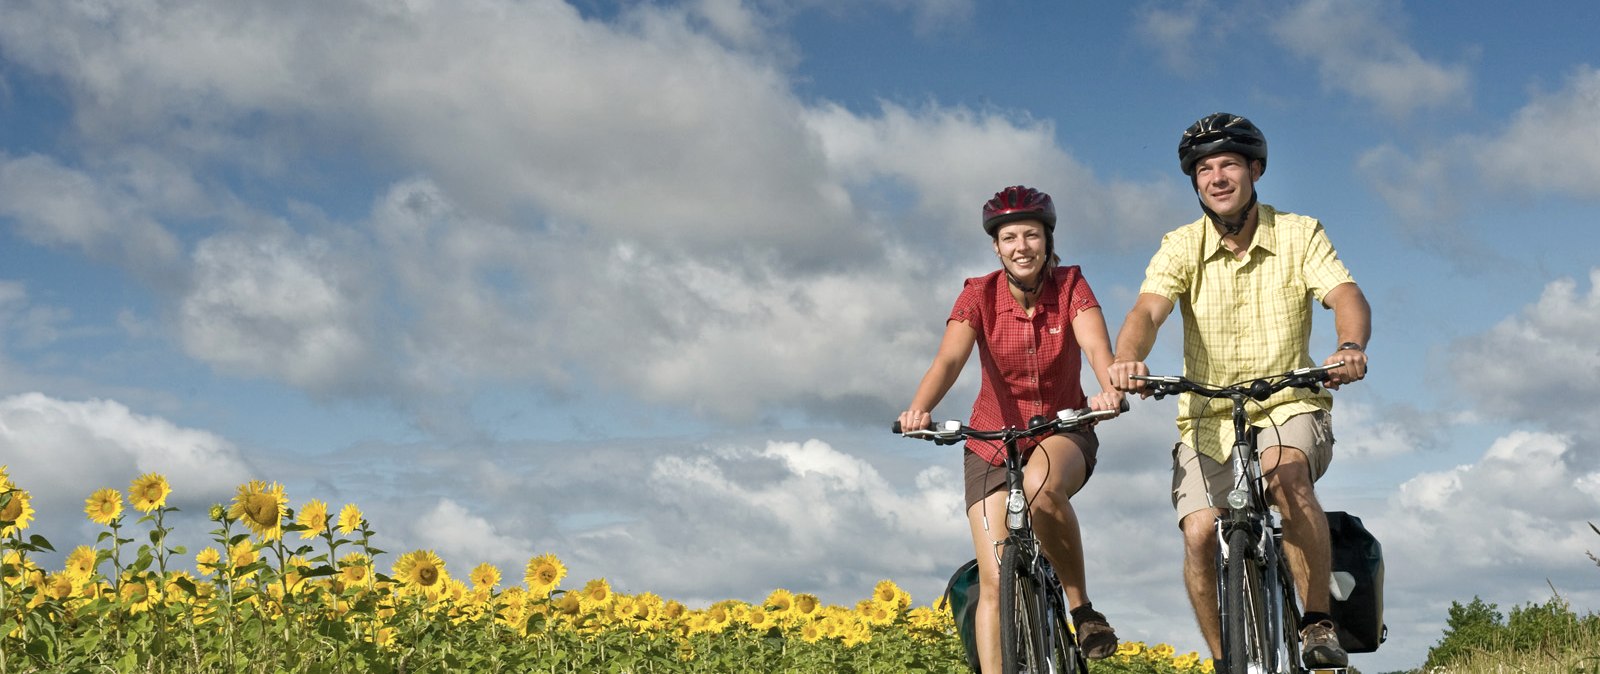 Mit dem Fahrrad vorbei an Sonneblumenfeldern, © Dominik Ketz / RPT